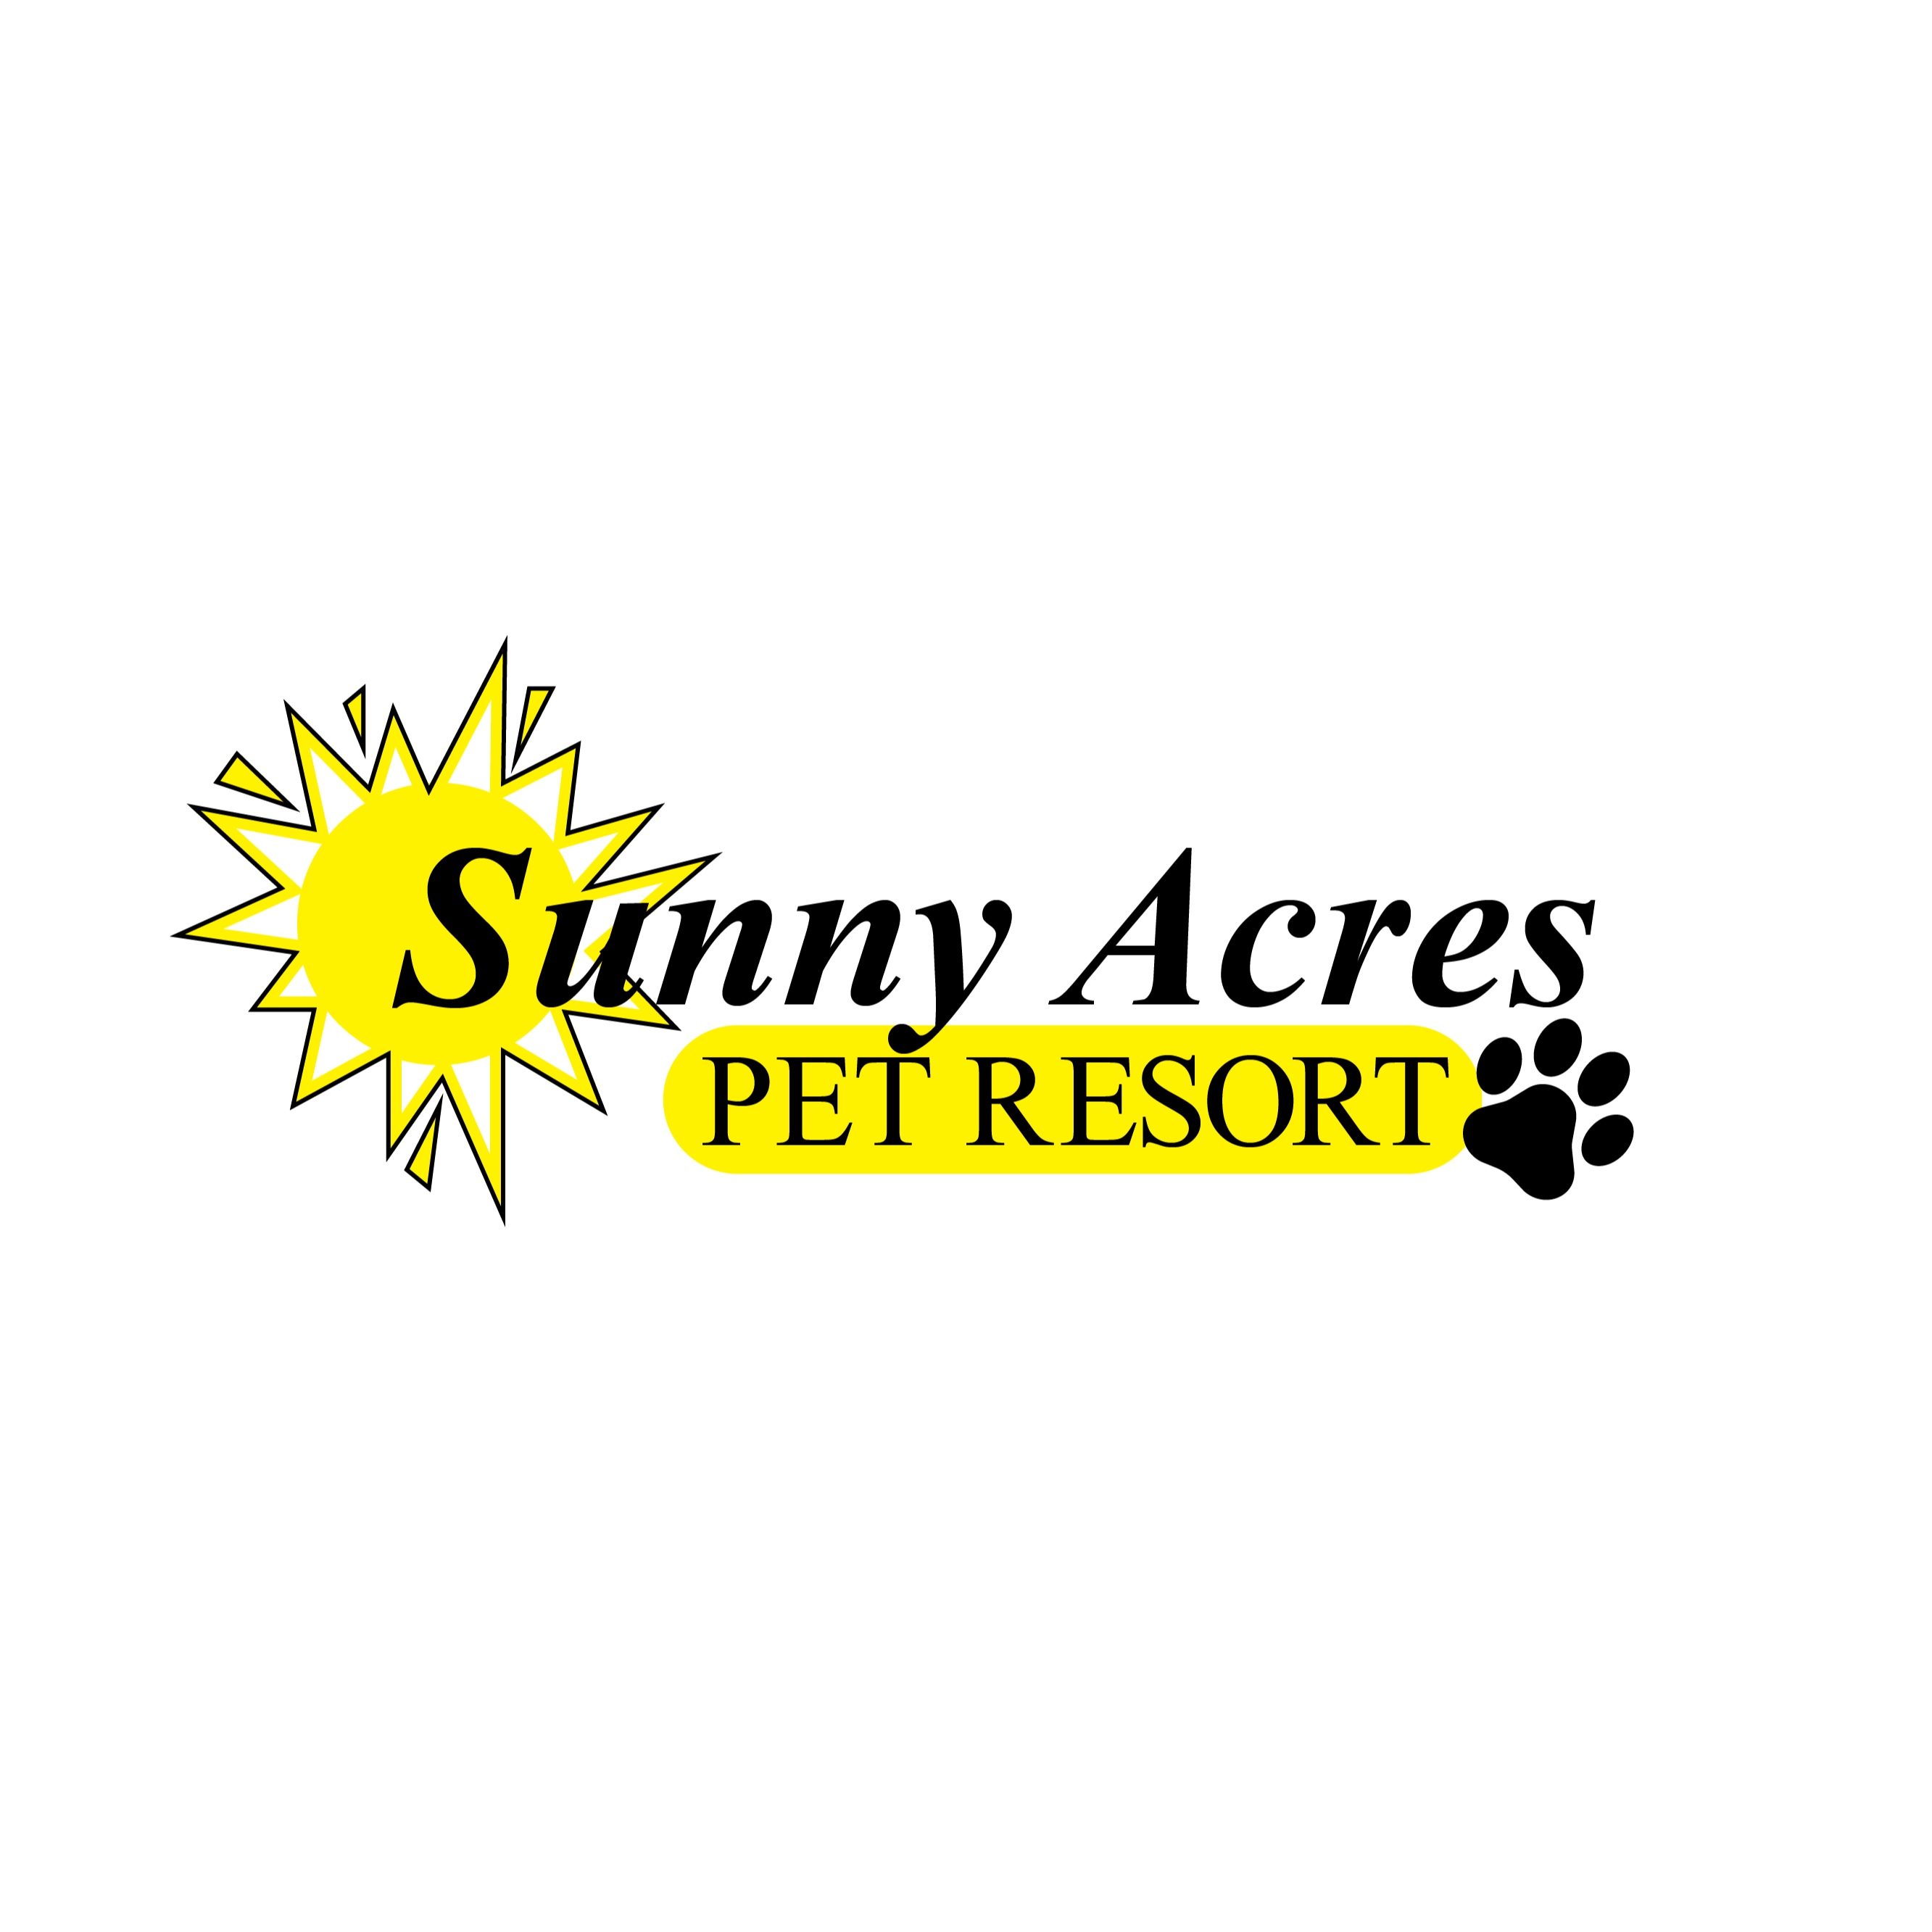 Sunny Acres Pet Resort